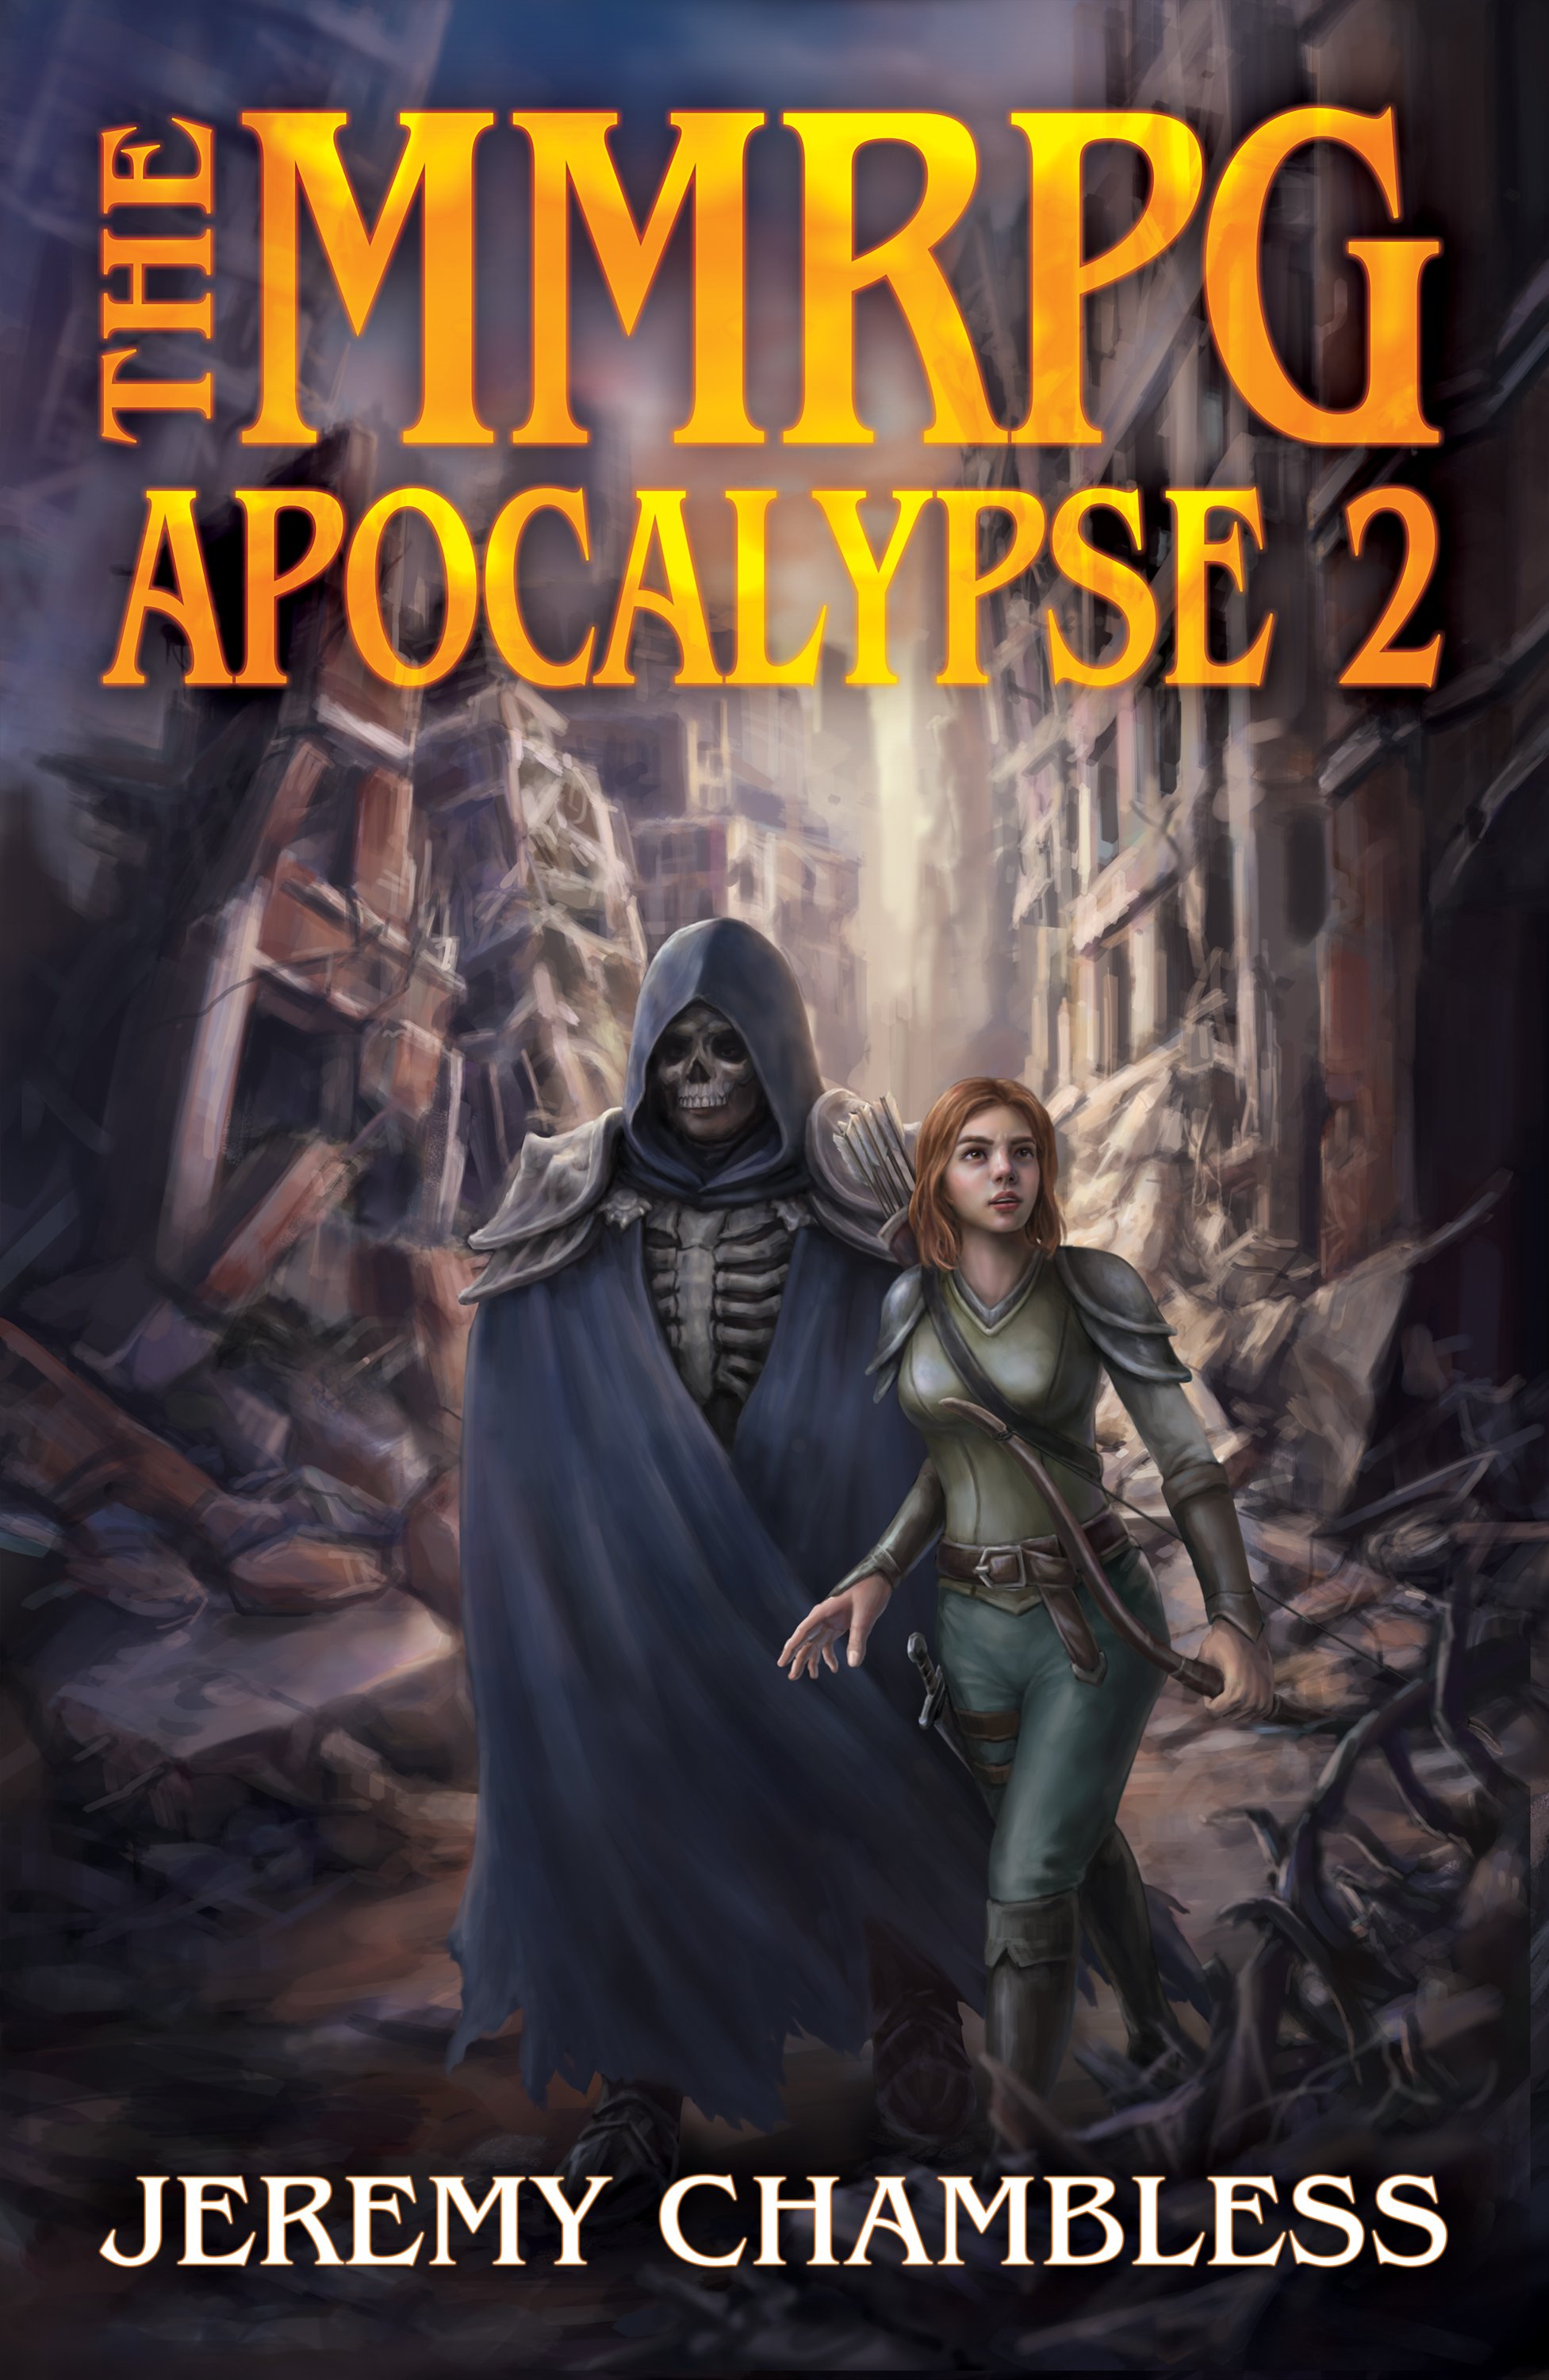 The MMRPG Apocalypse 2